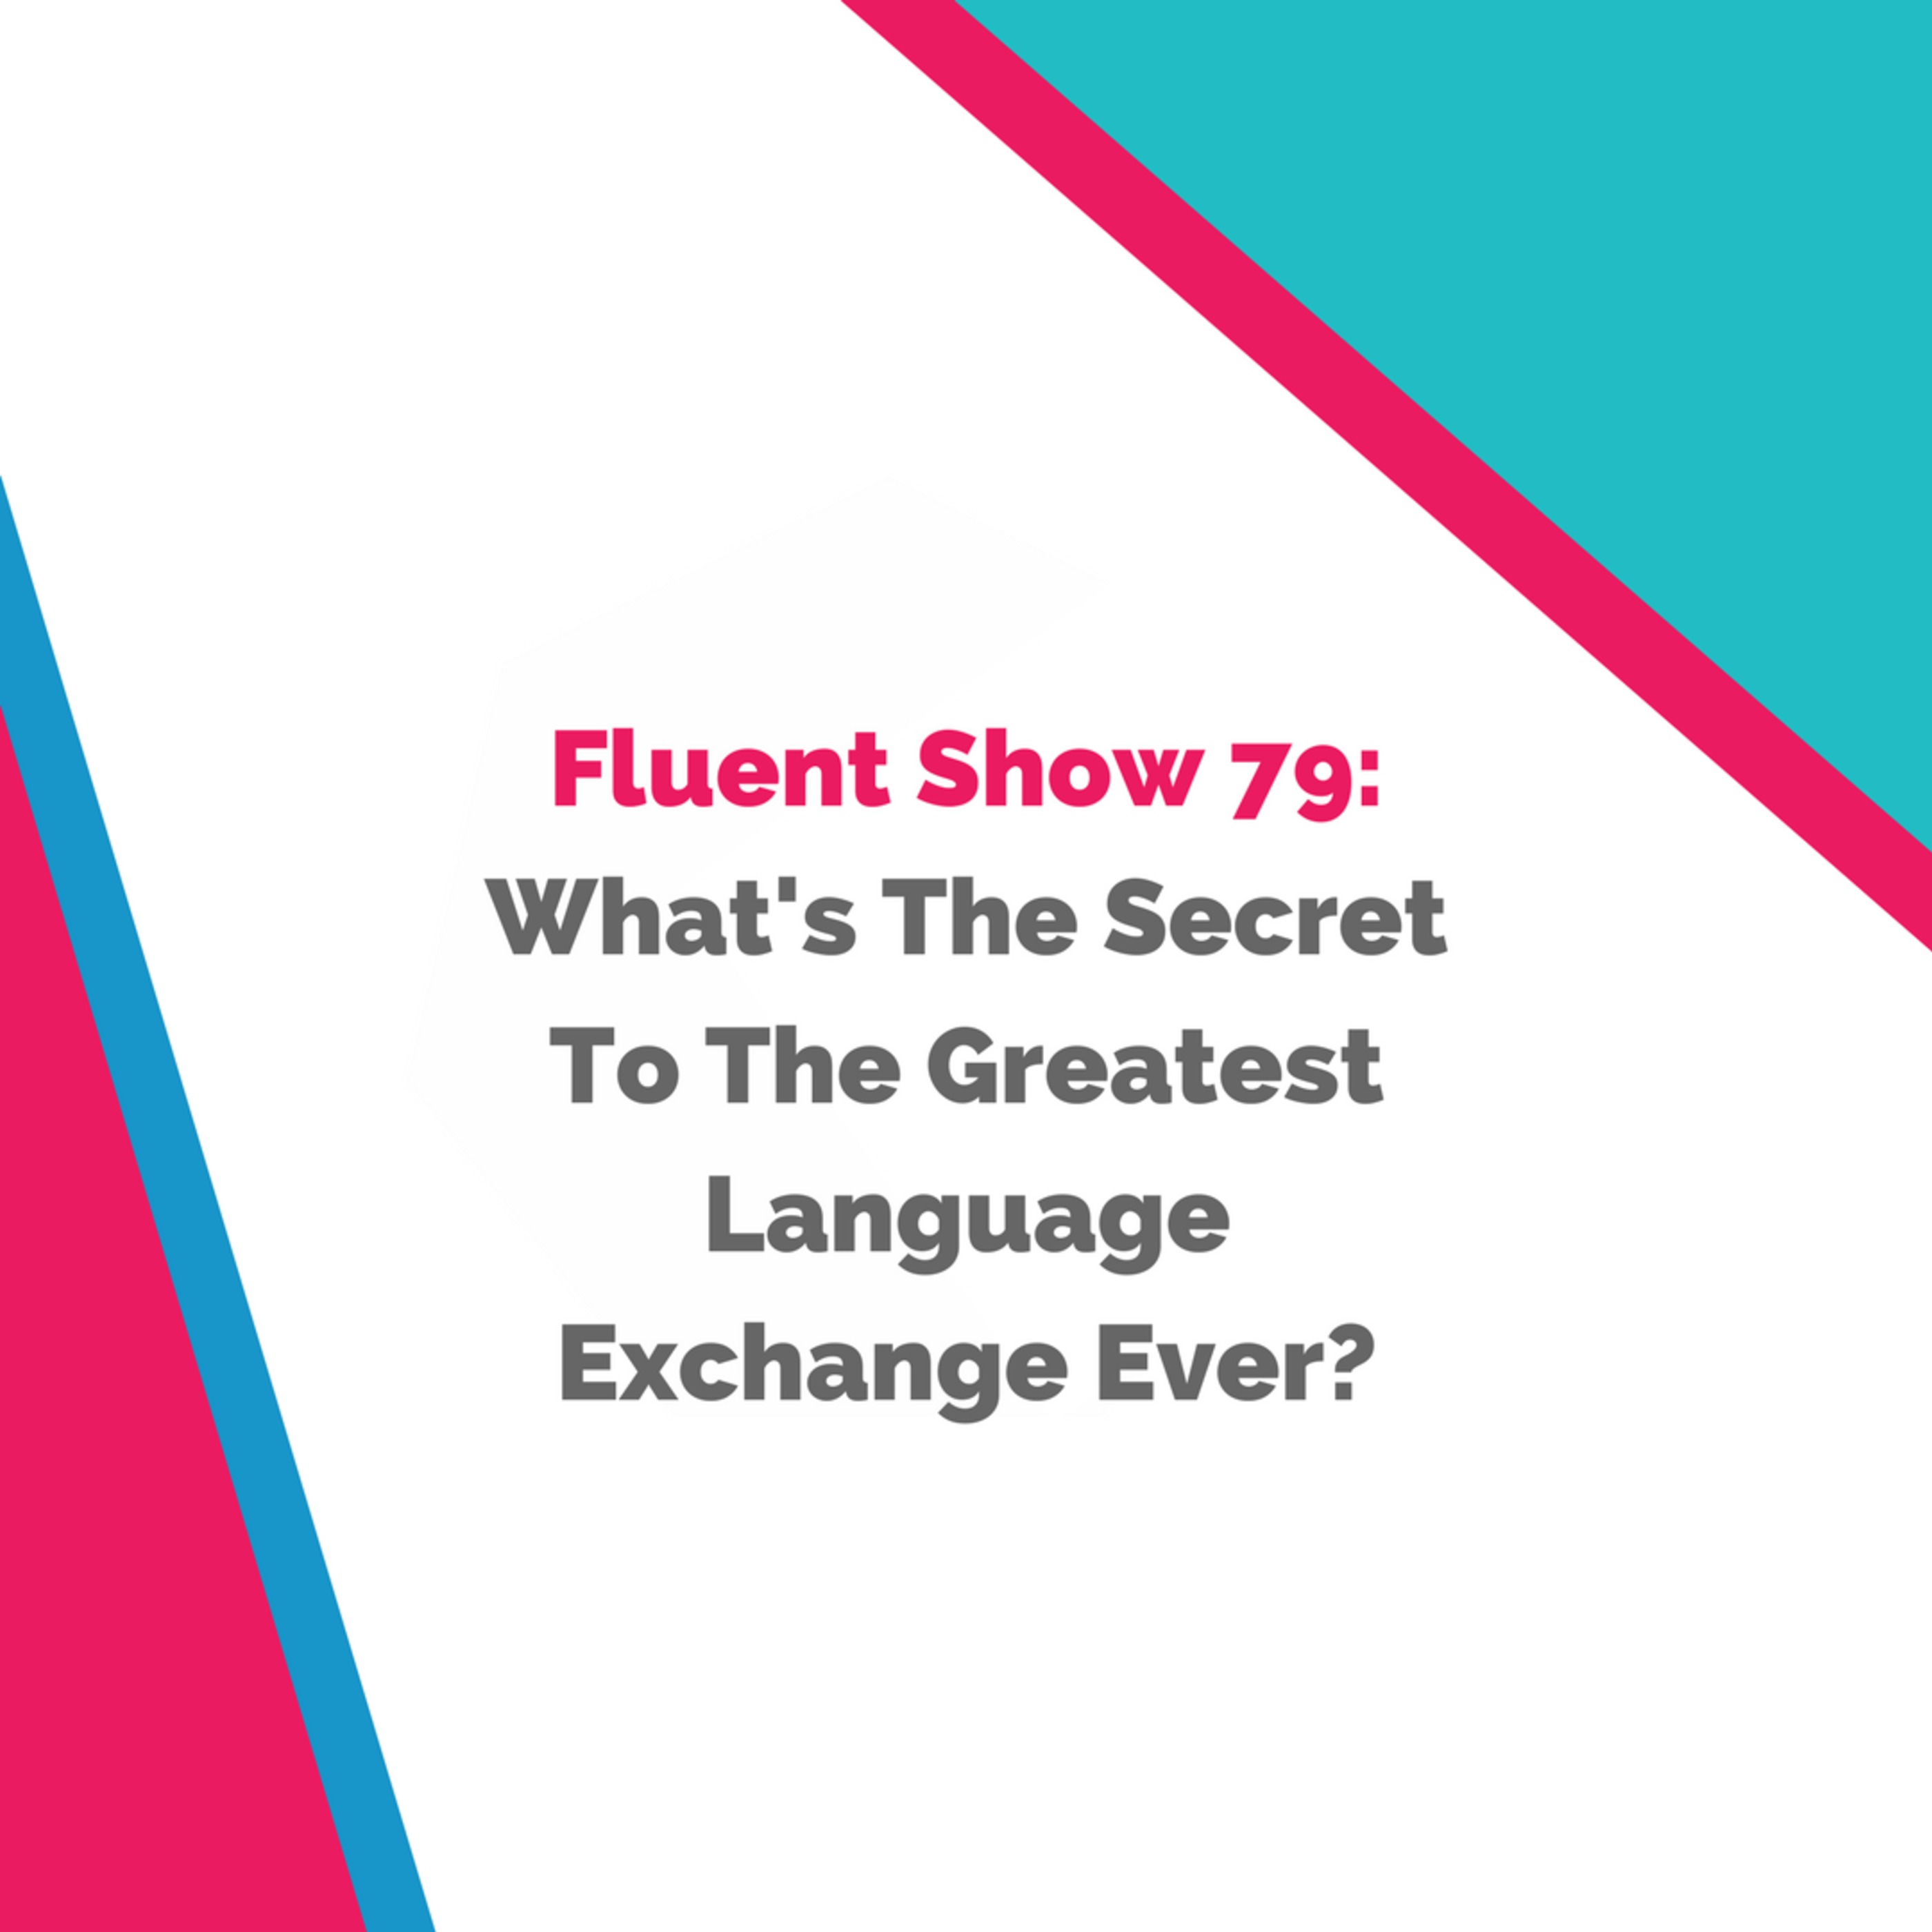 The Fluent Show